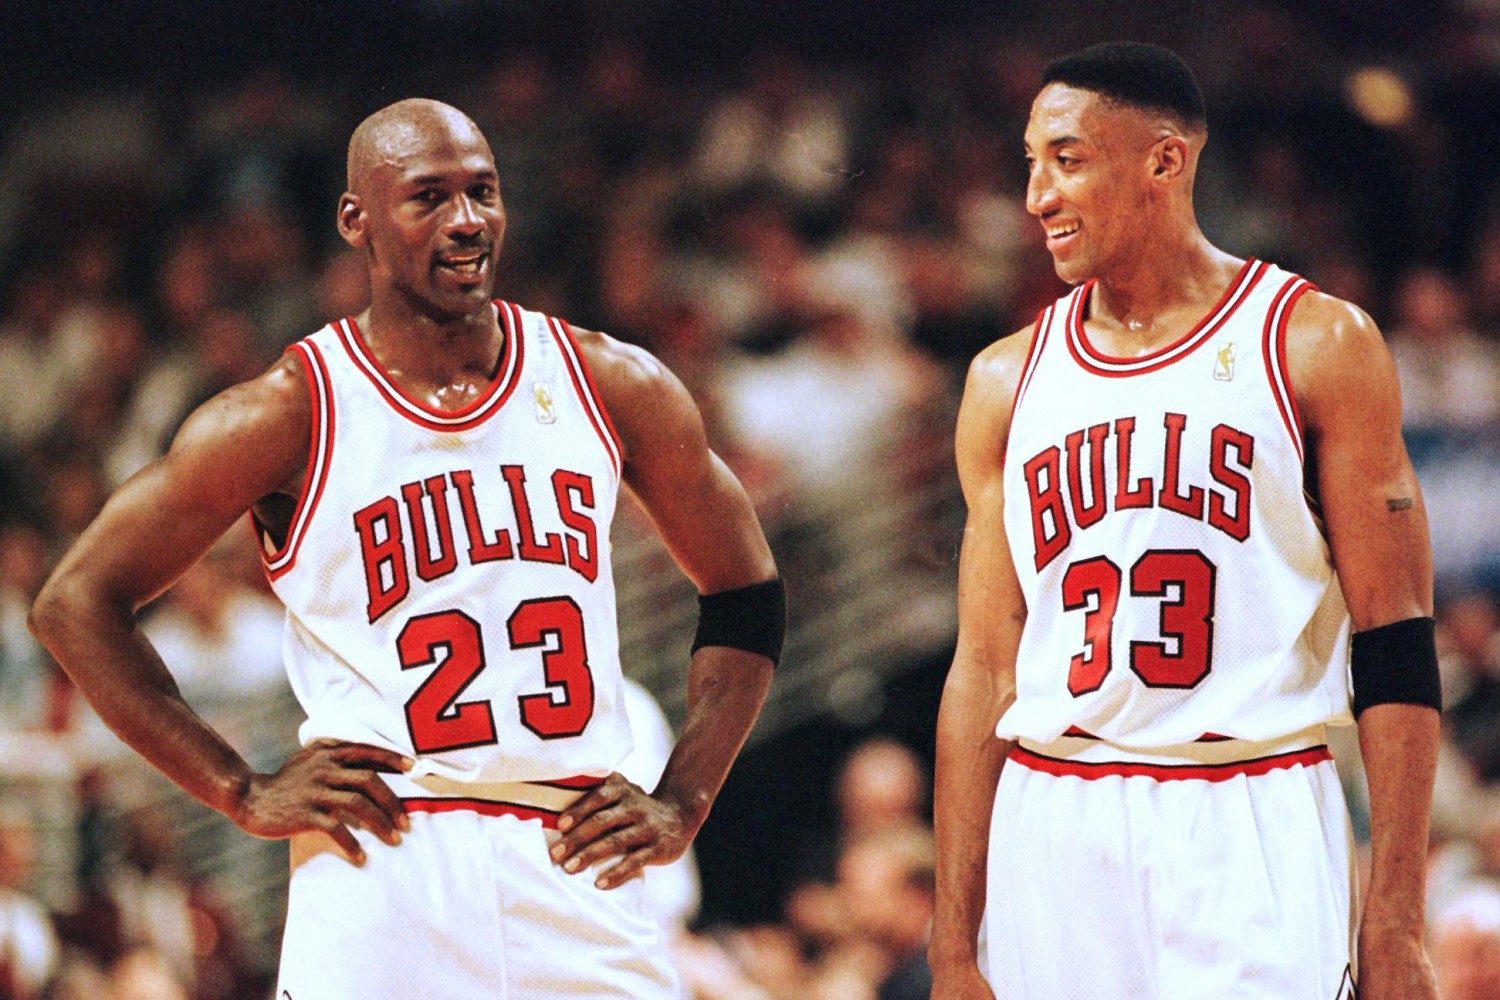 Former Chicago Bulls Coach Explained How Michael Jordan's First